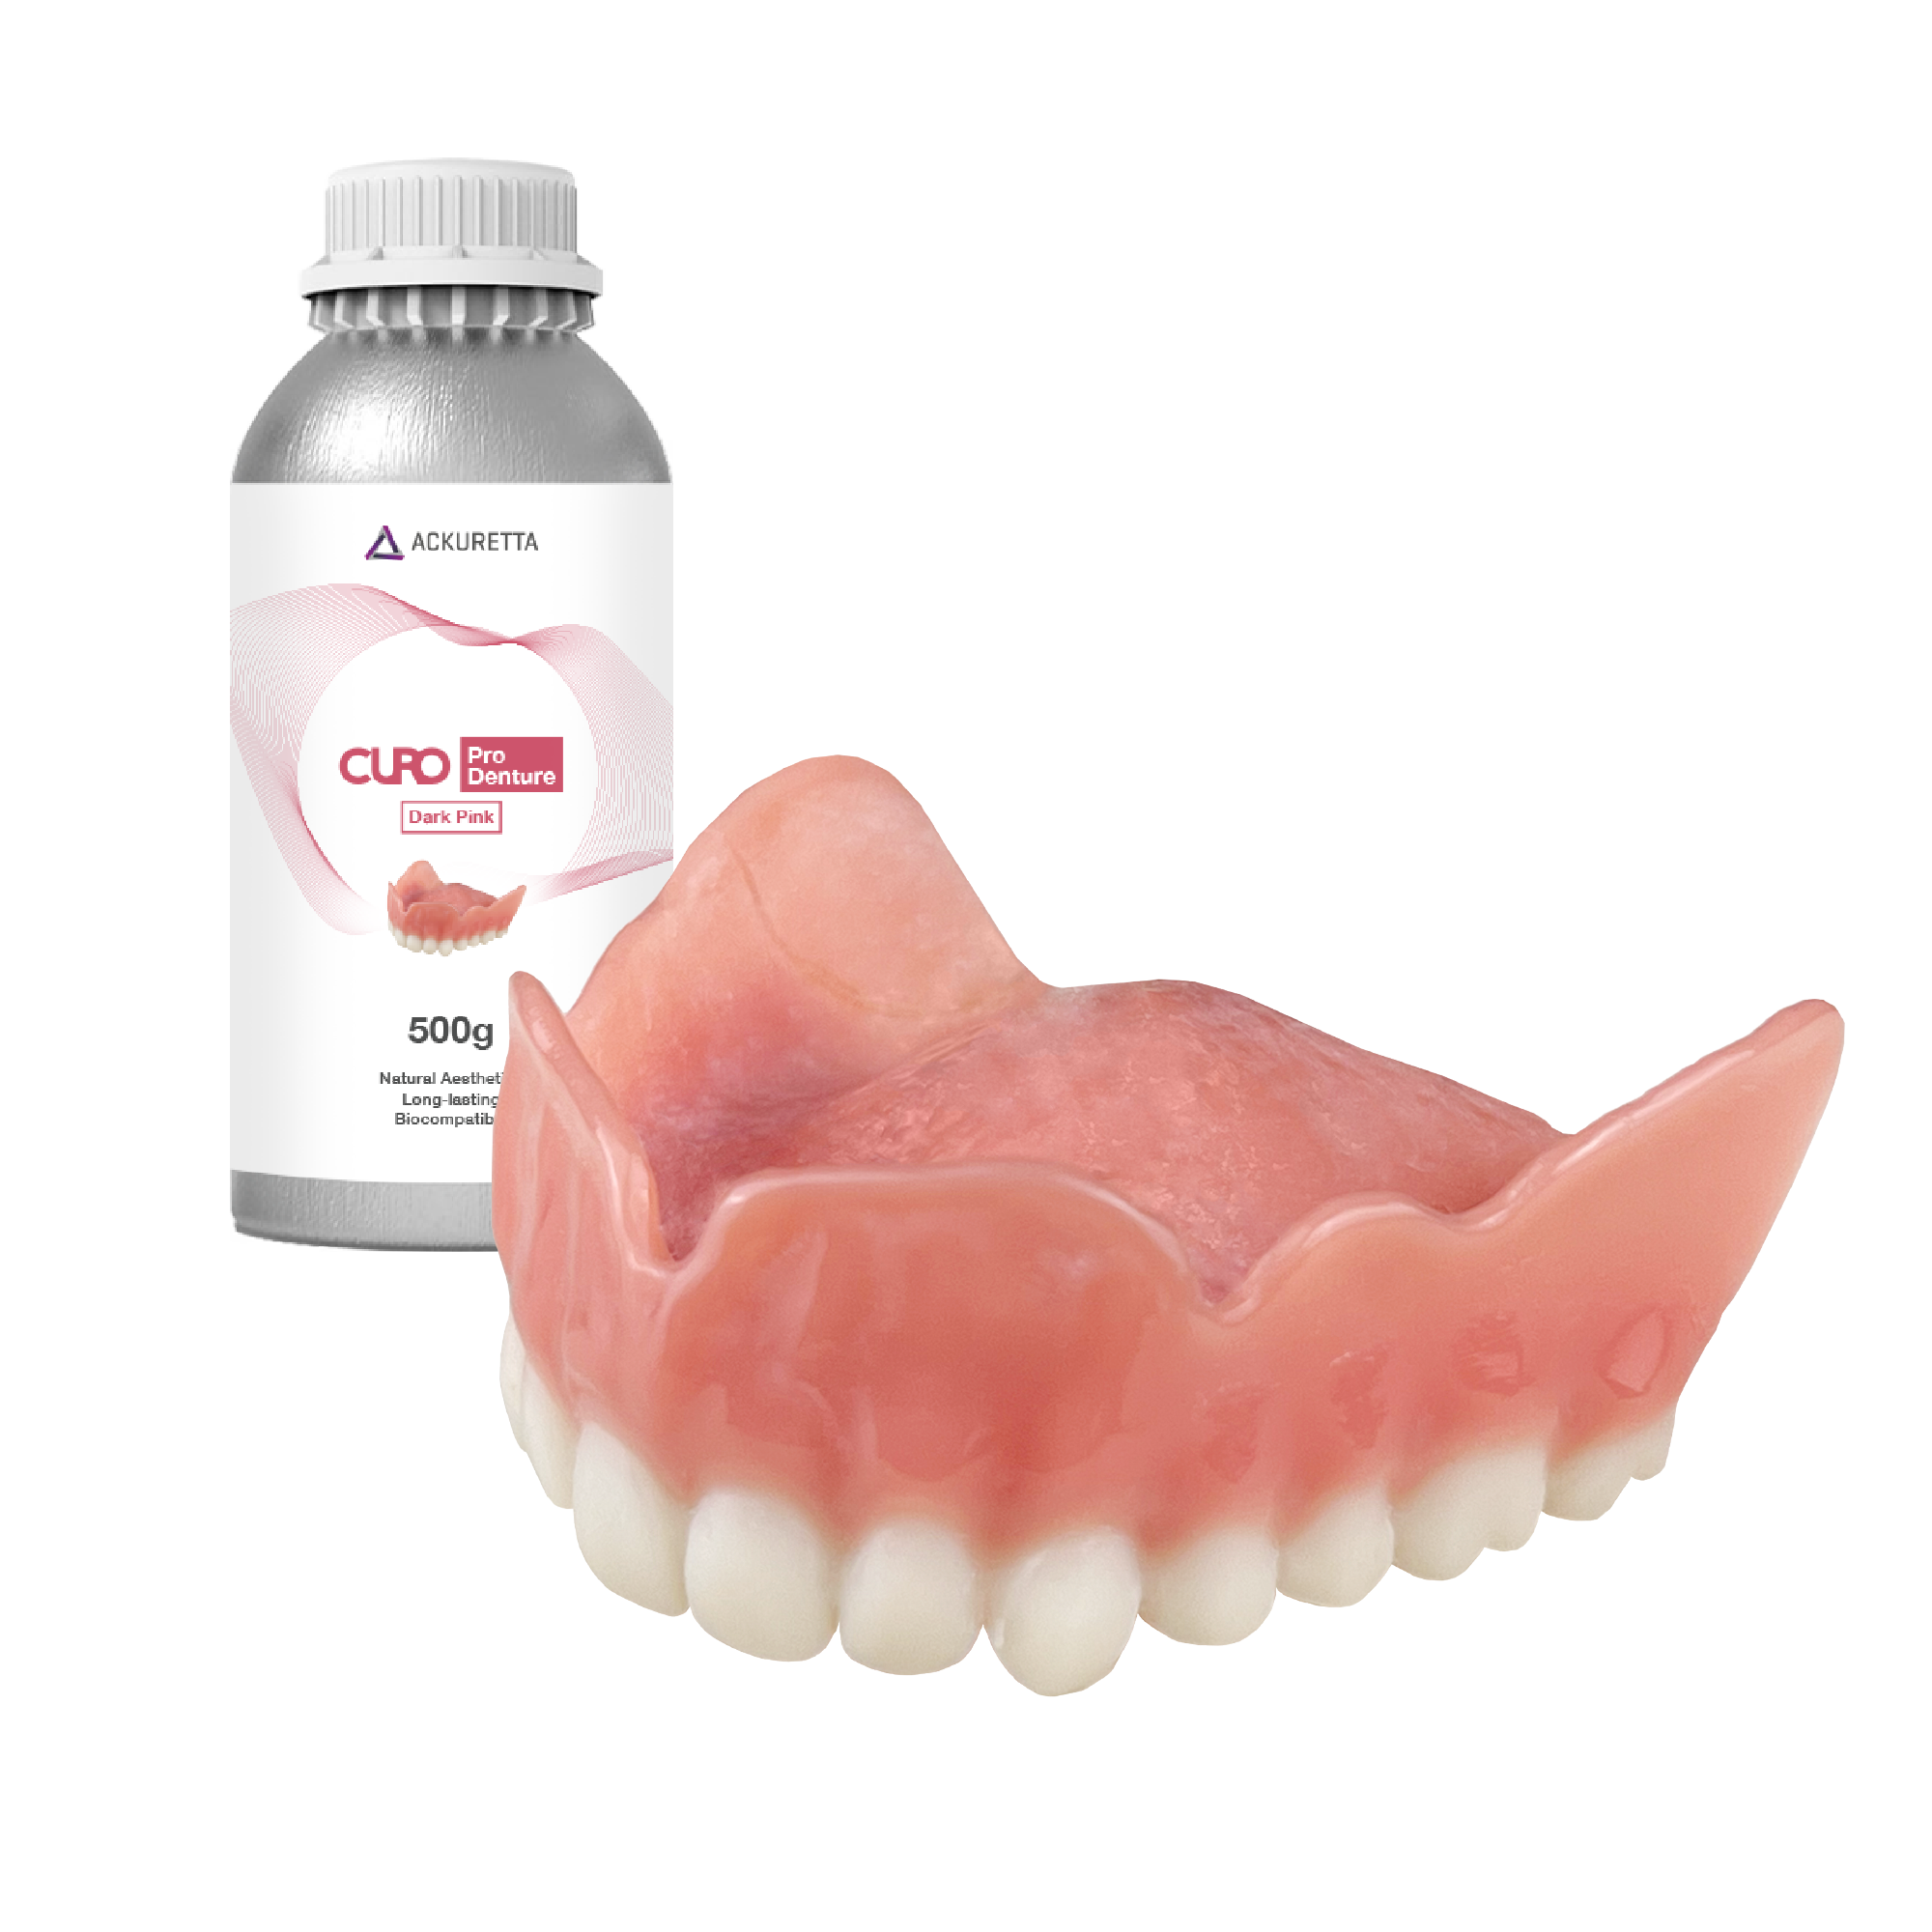 CURO  Biocompatible Resins for Dental 3D Printing – Ackuretta